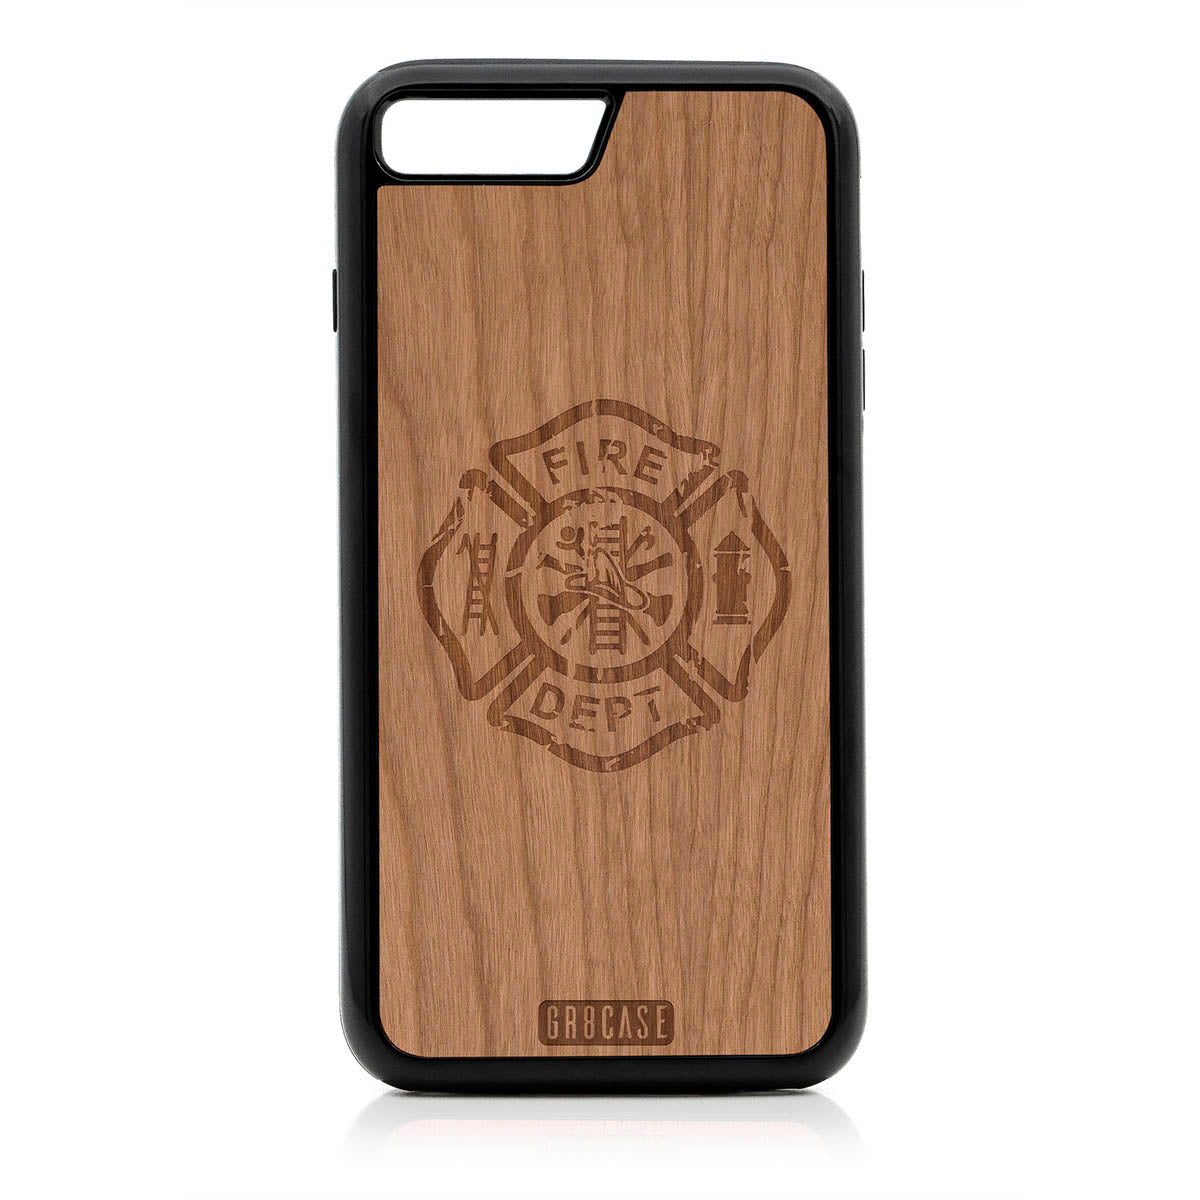 Fire Department Design Wood Case For iPhone 7 Plus / 8 Plus by GR8CASE